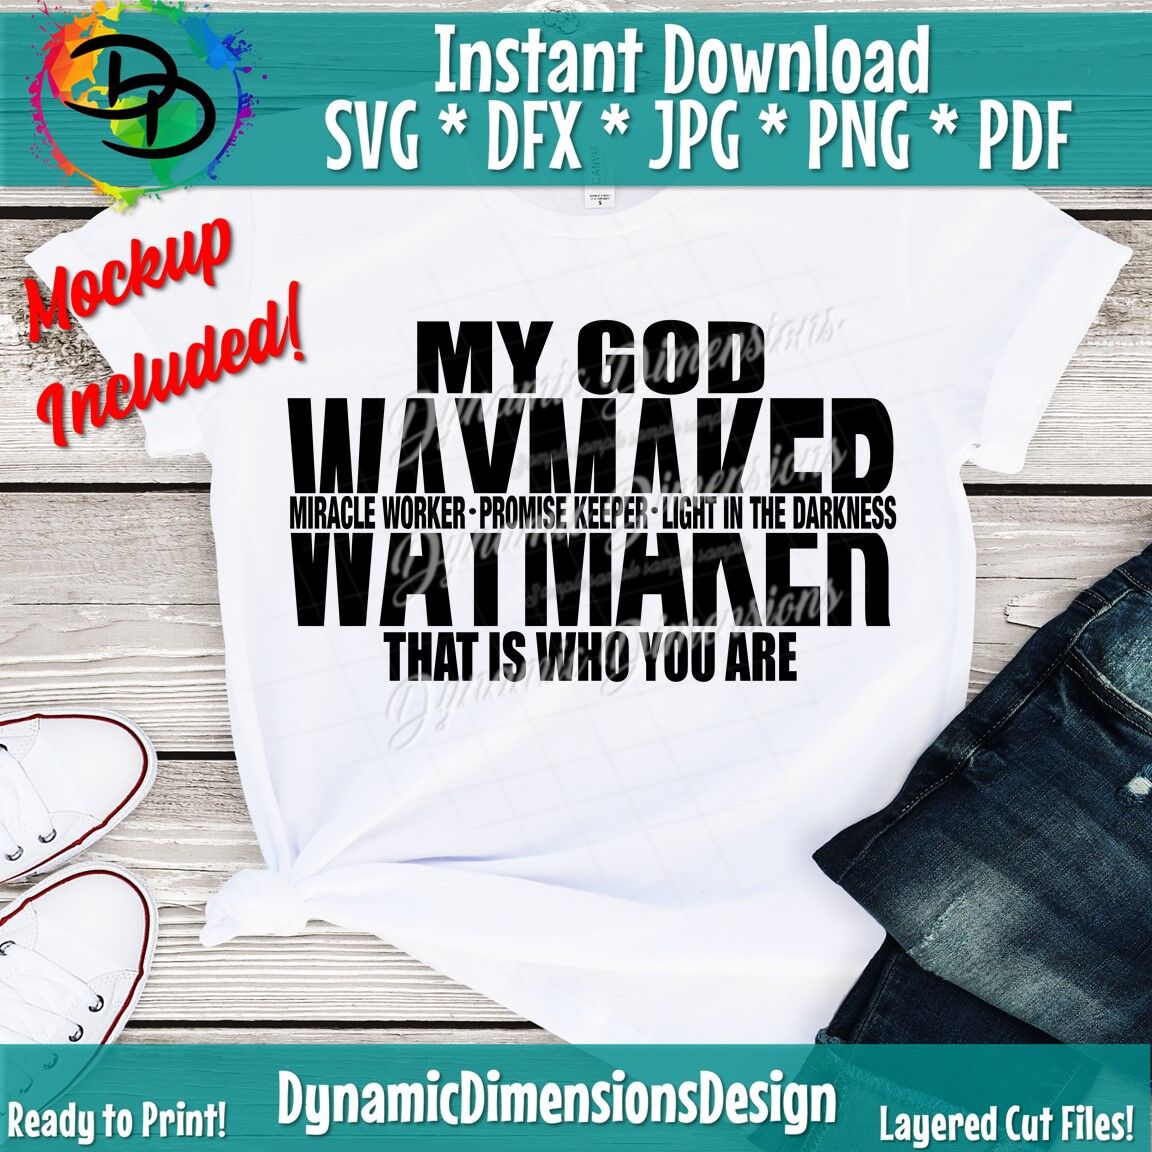 Free Free 335 Waymaker Svg Free SVG PNG EPS DXF File